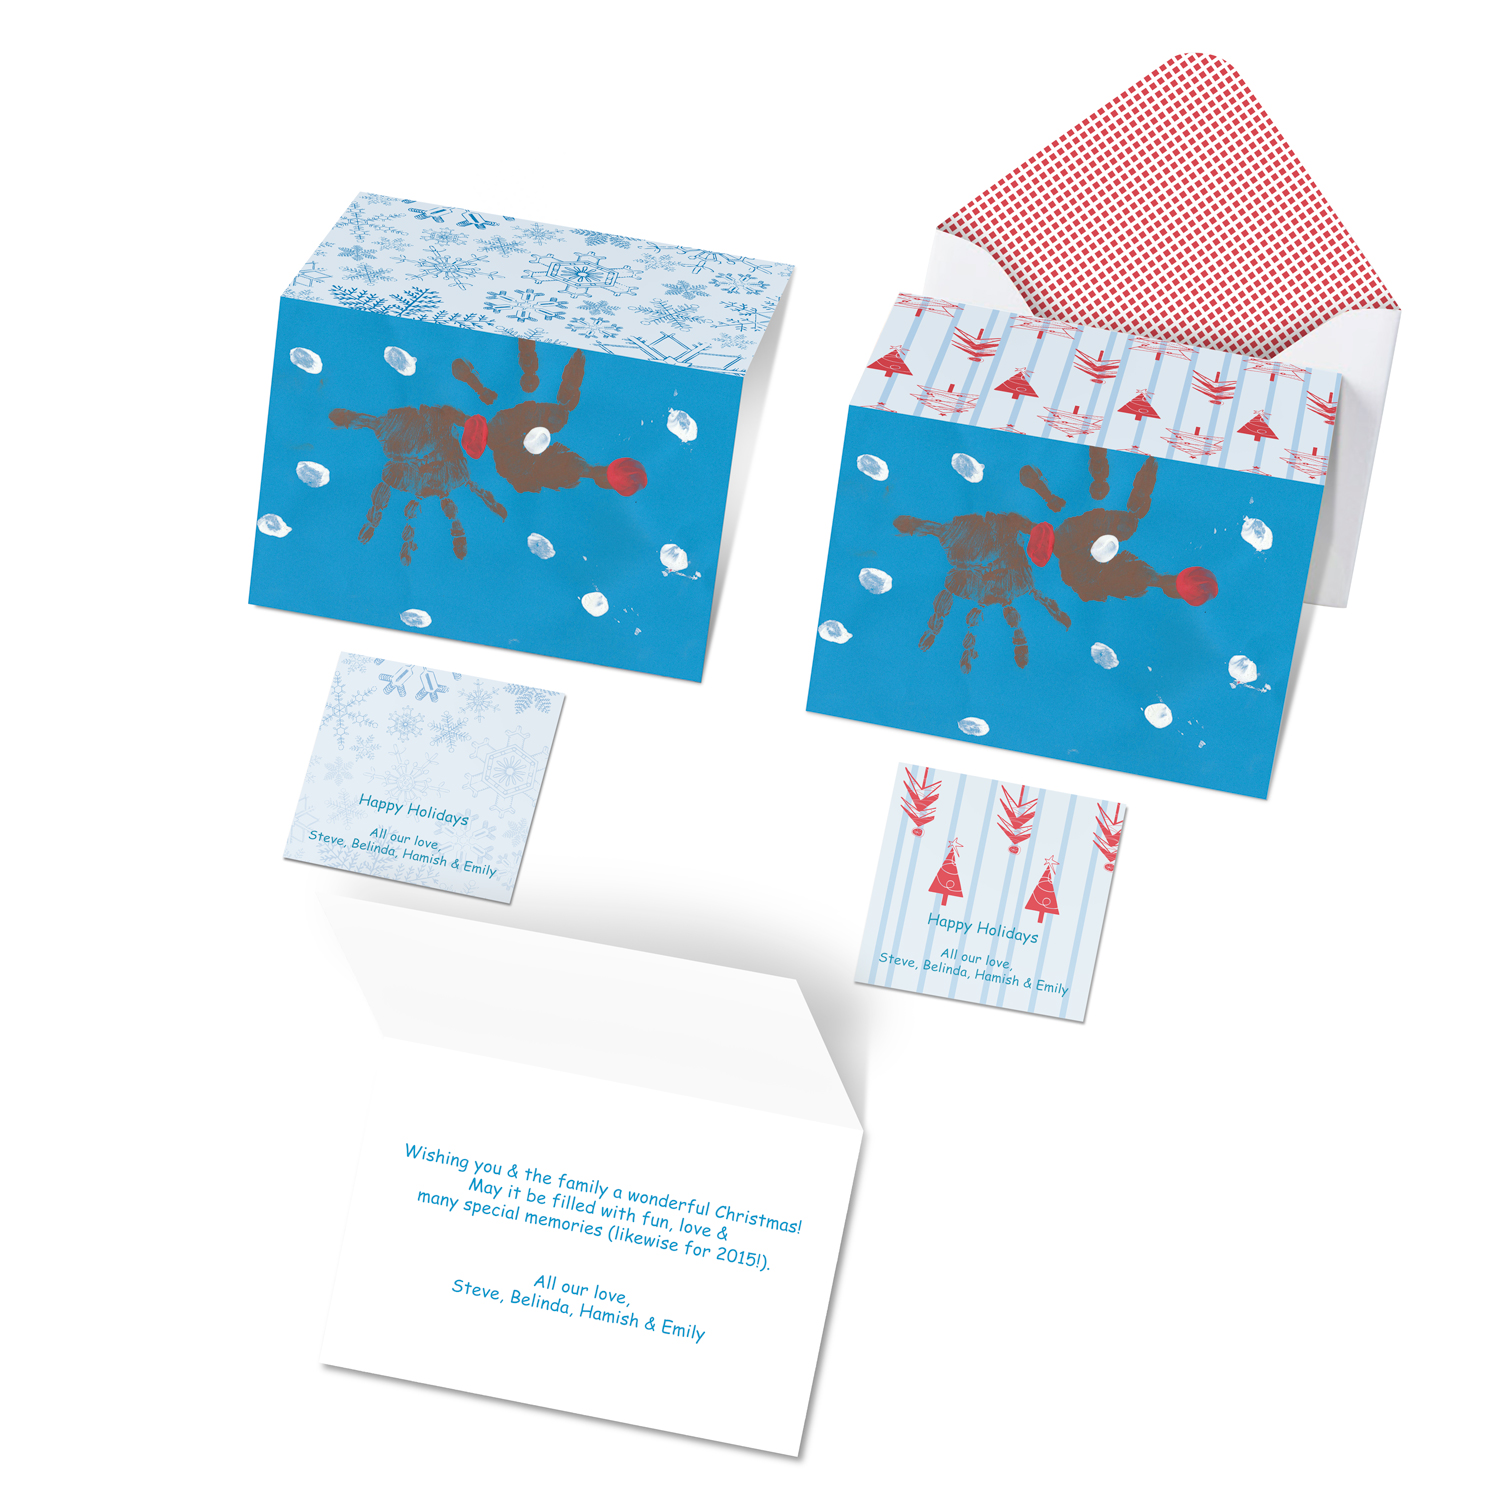 Reindeer Christmas Cards using Artwork